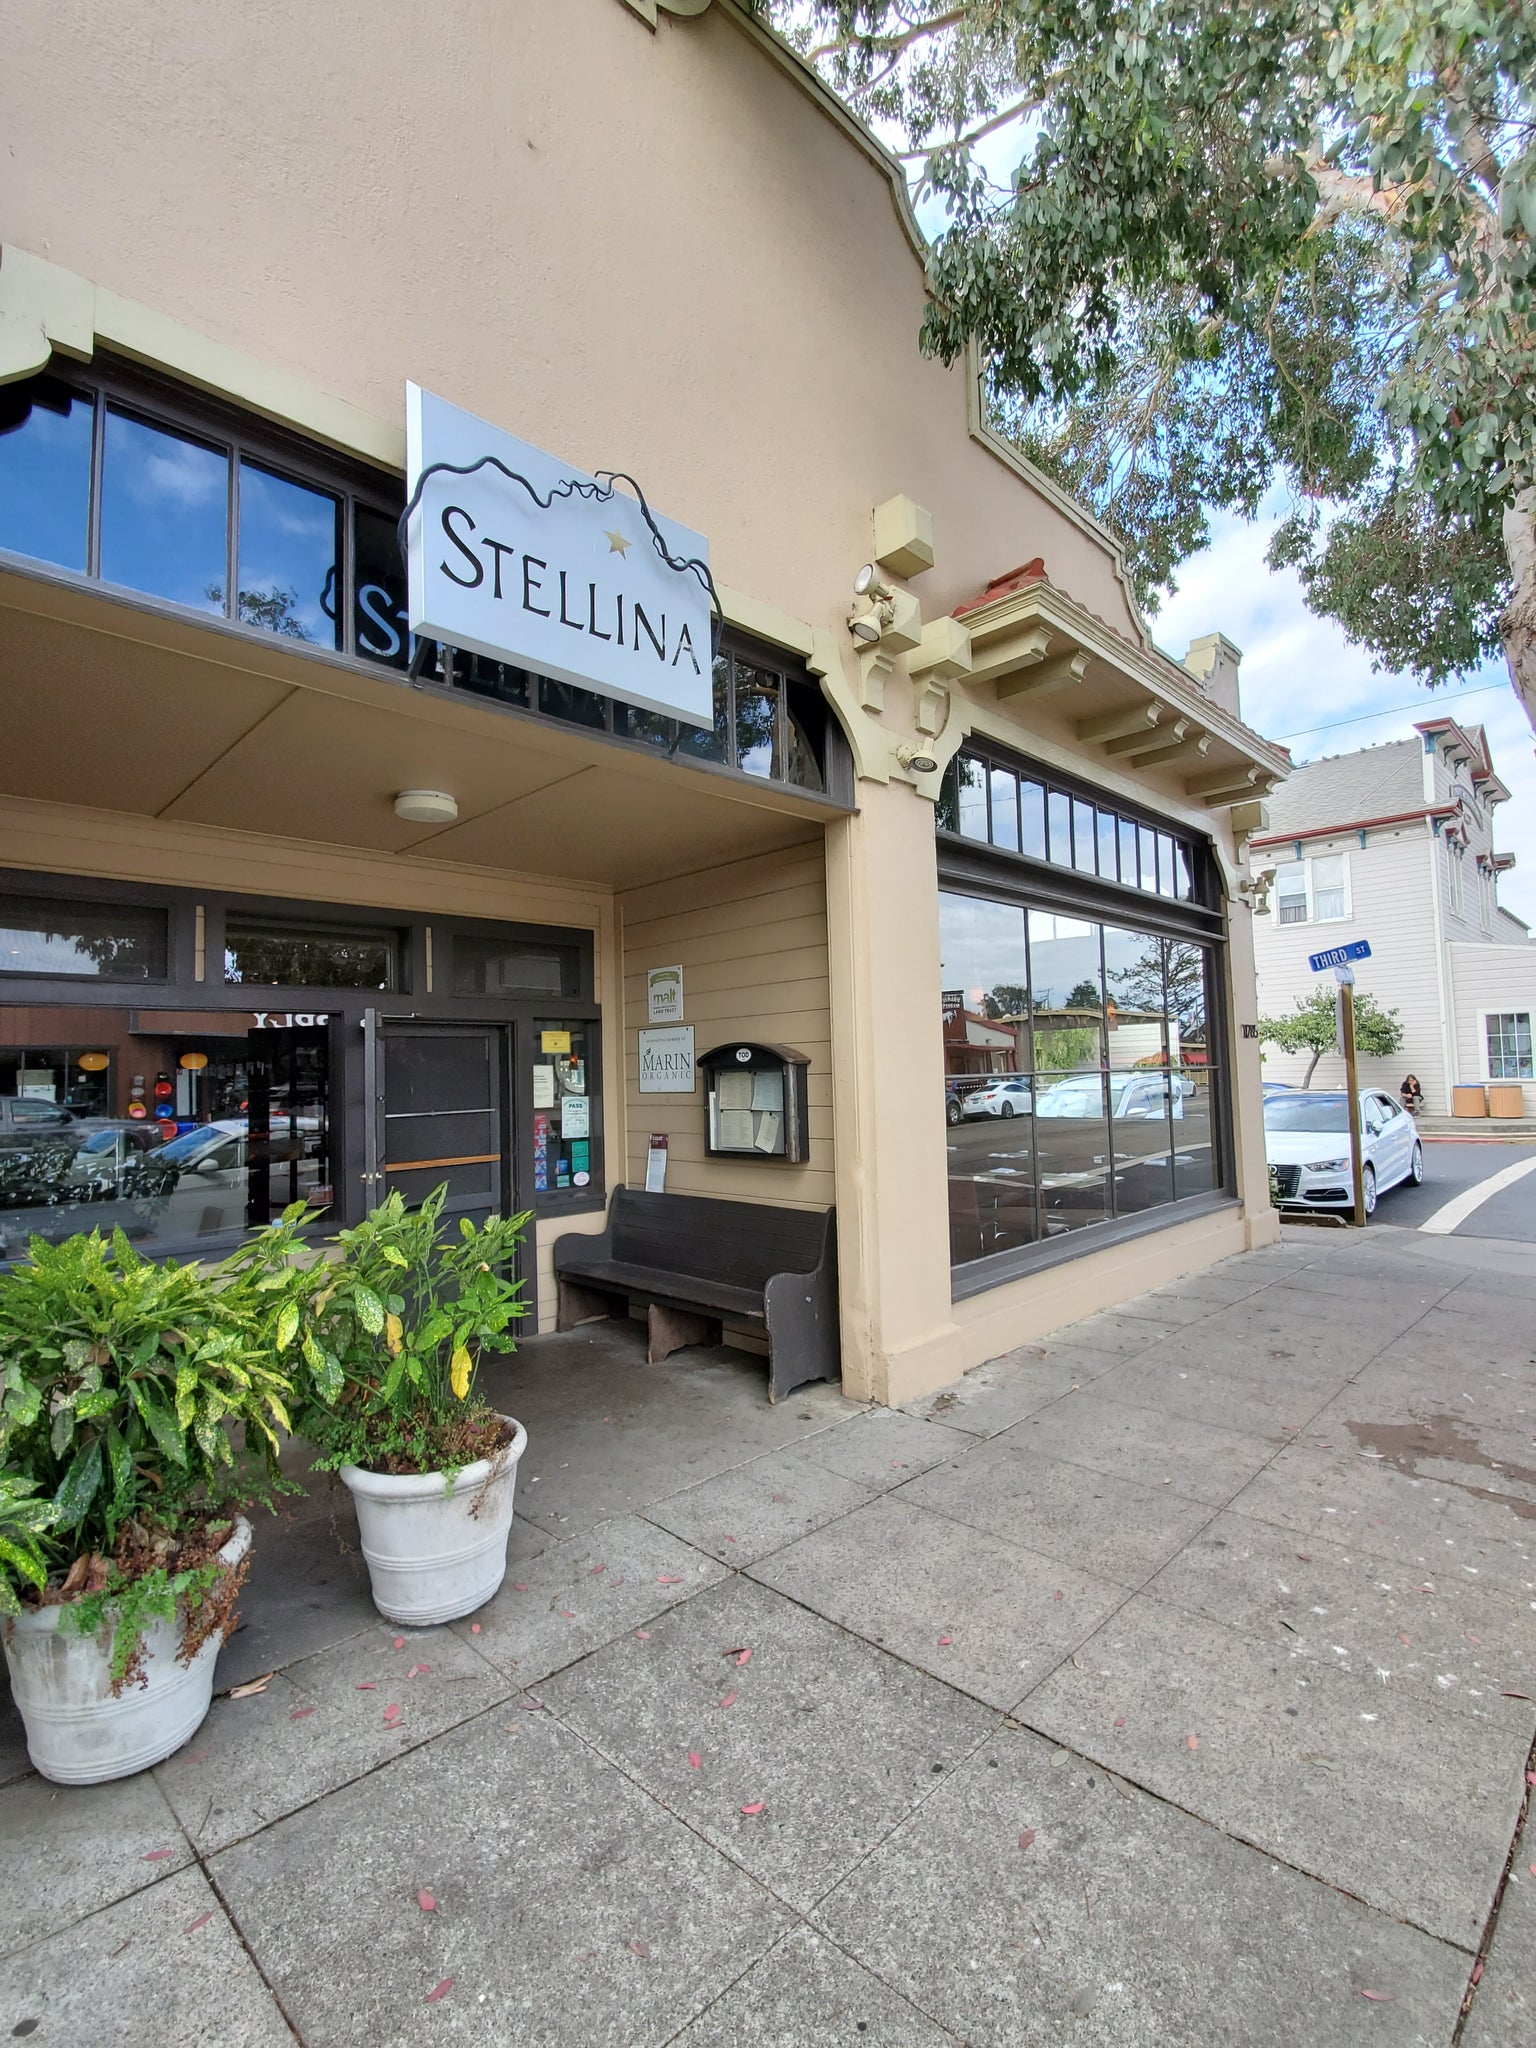 The Stellina restaurant in Point Reyes Station